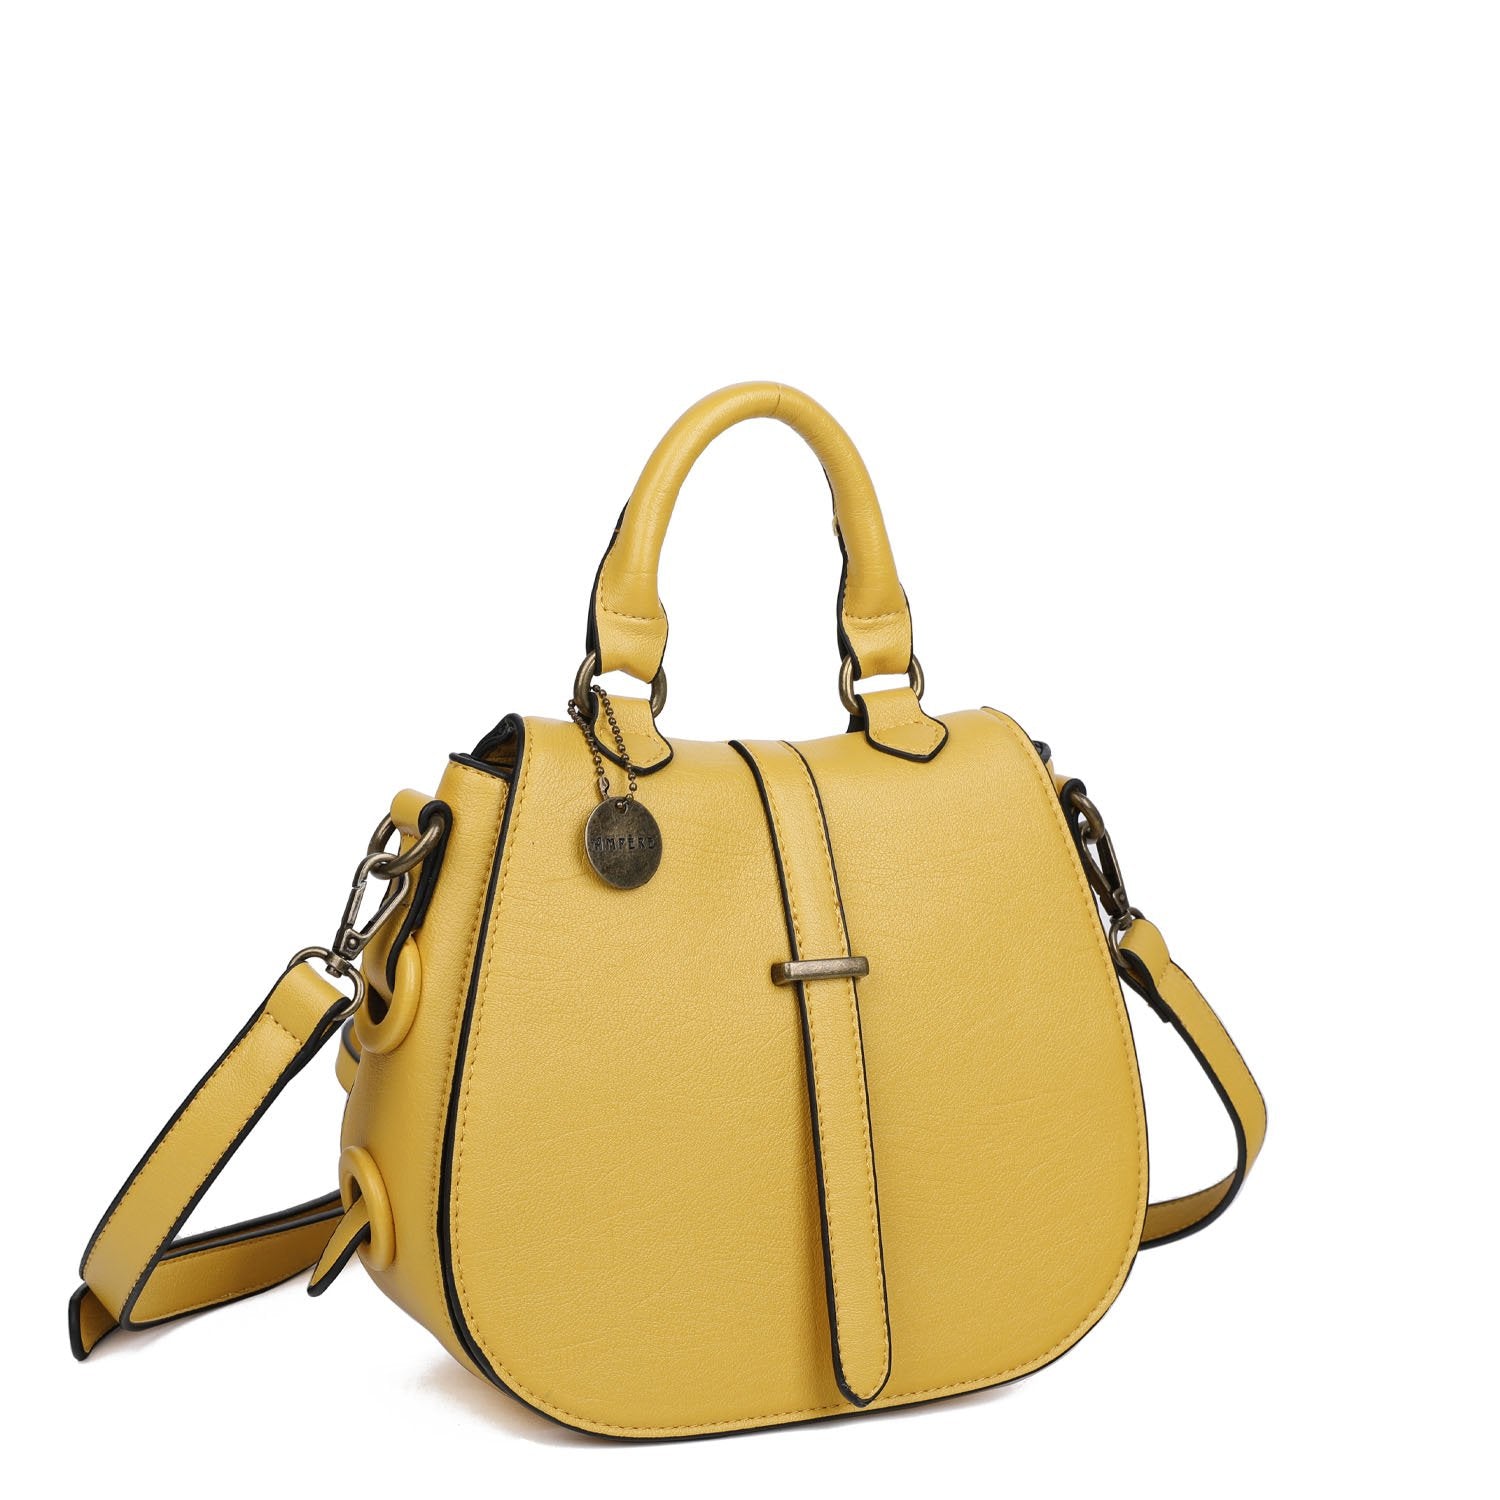 Carli Crossbody Handbag Purse - Nutty Mustard | Vegan Leather - Lavender Hills BeautyAmpere CreationsC125-NMUST